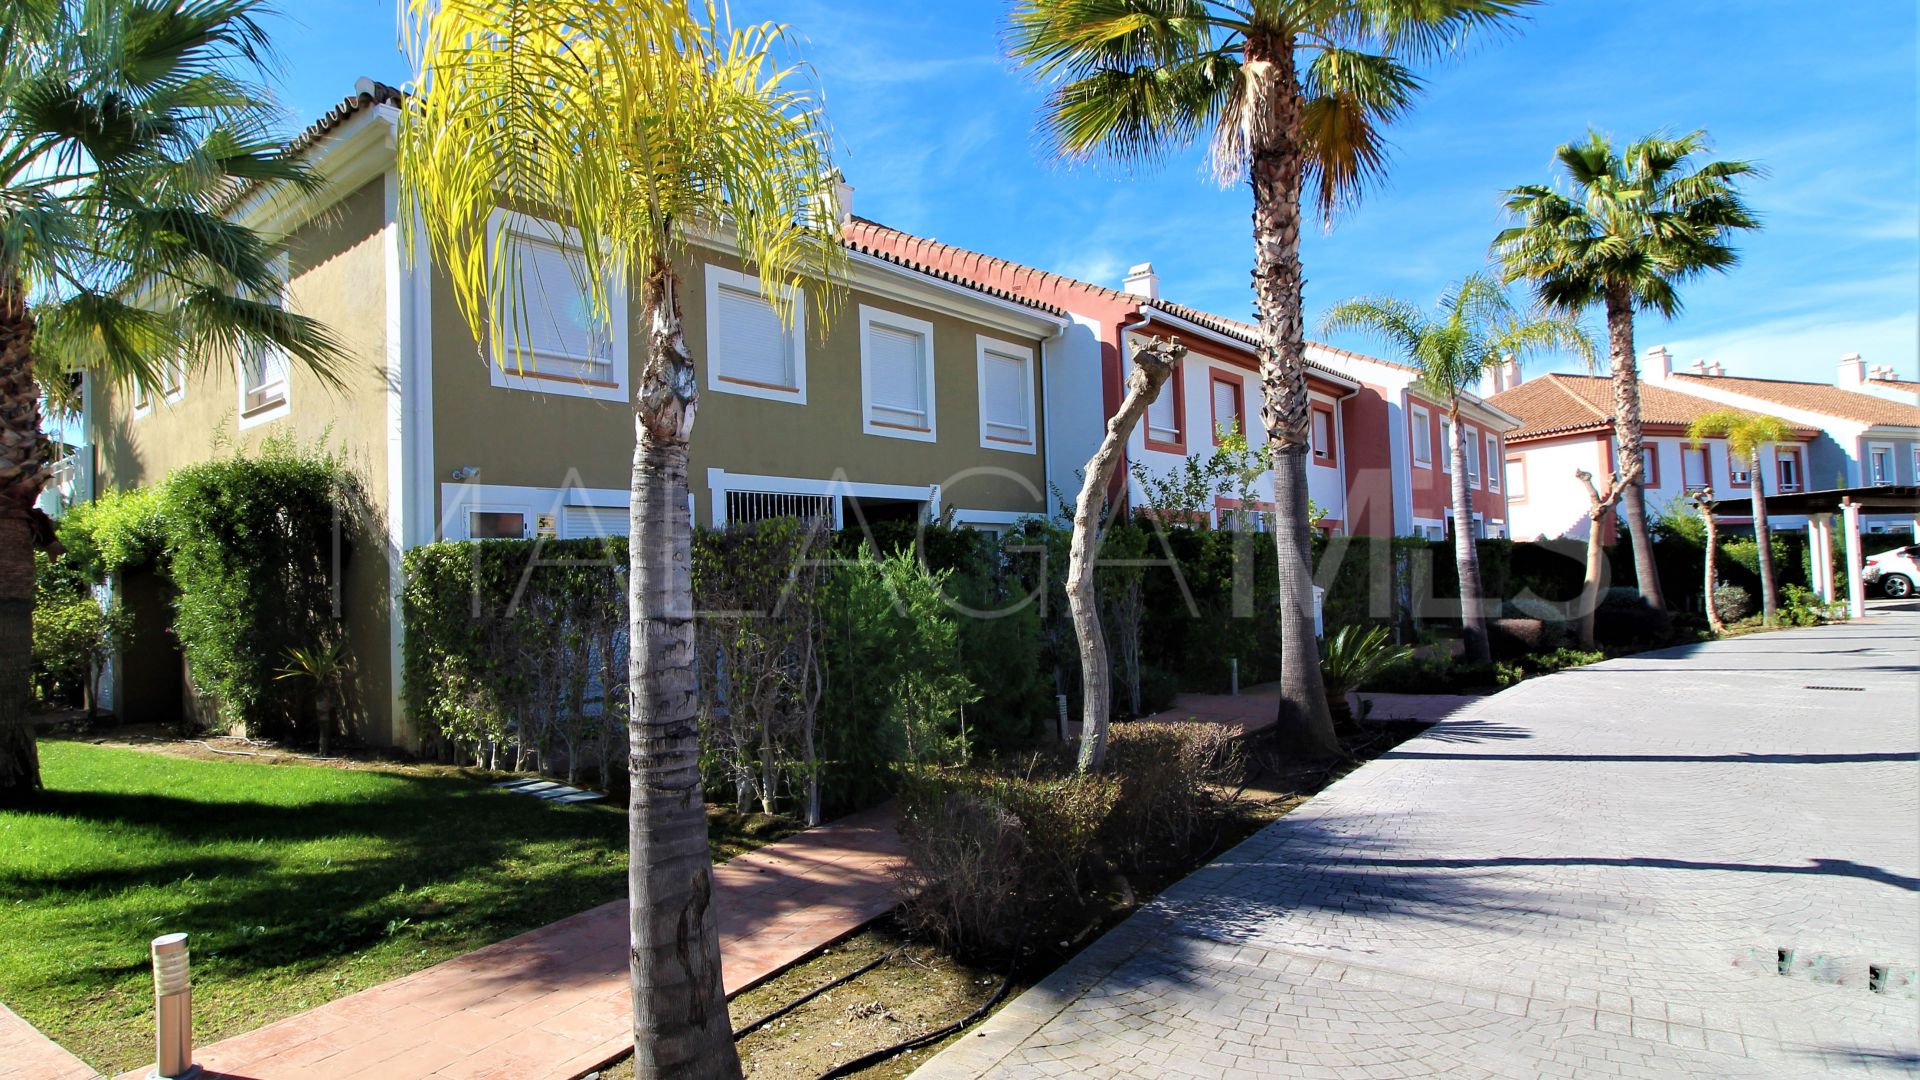 Maison de ville for sale in Cortijo del Mar